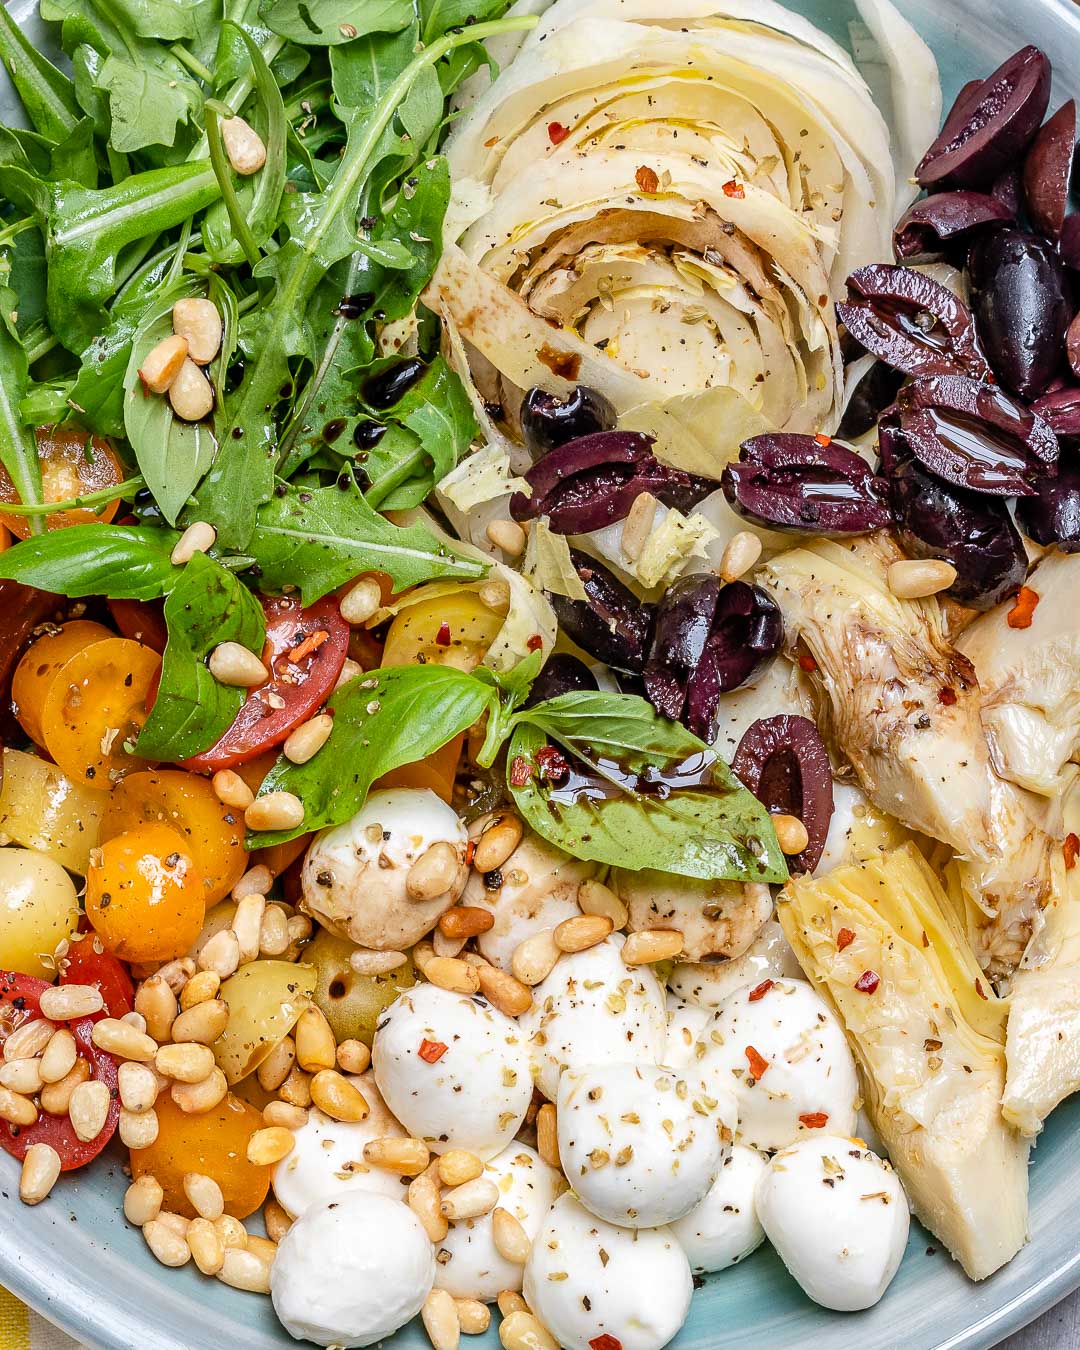 https://cleanfoodcrush.com/wp-content/uploads/2019/10/Rachels-Mediterranean-Style-Chopped-Salad.jpg